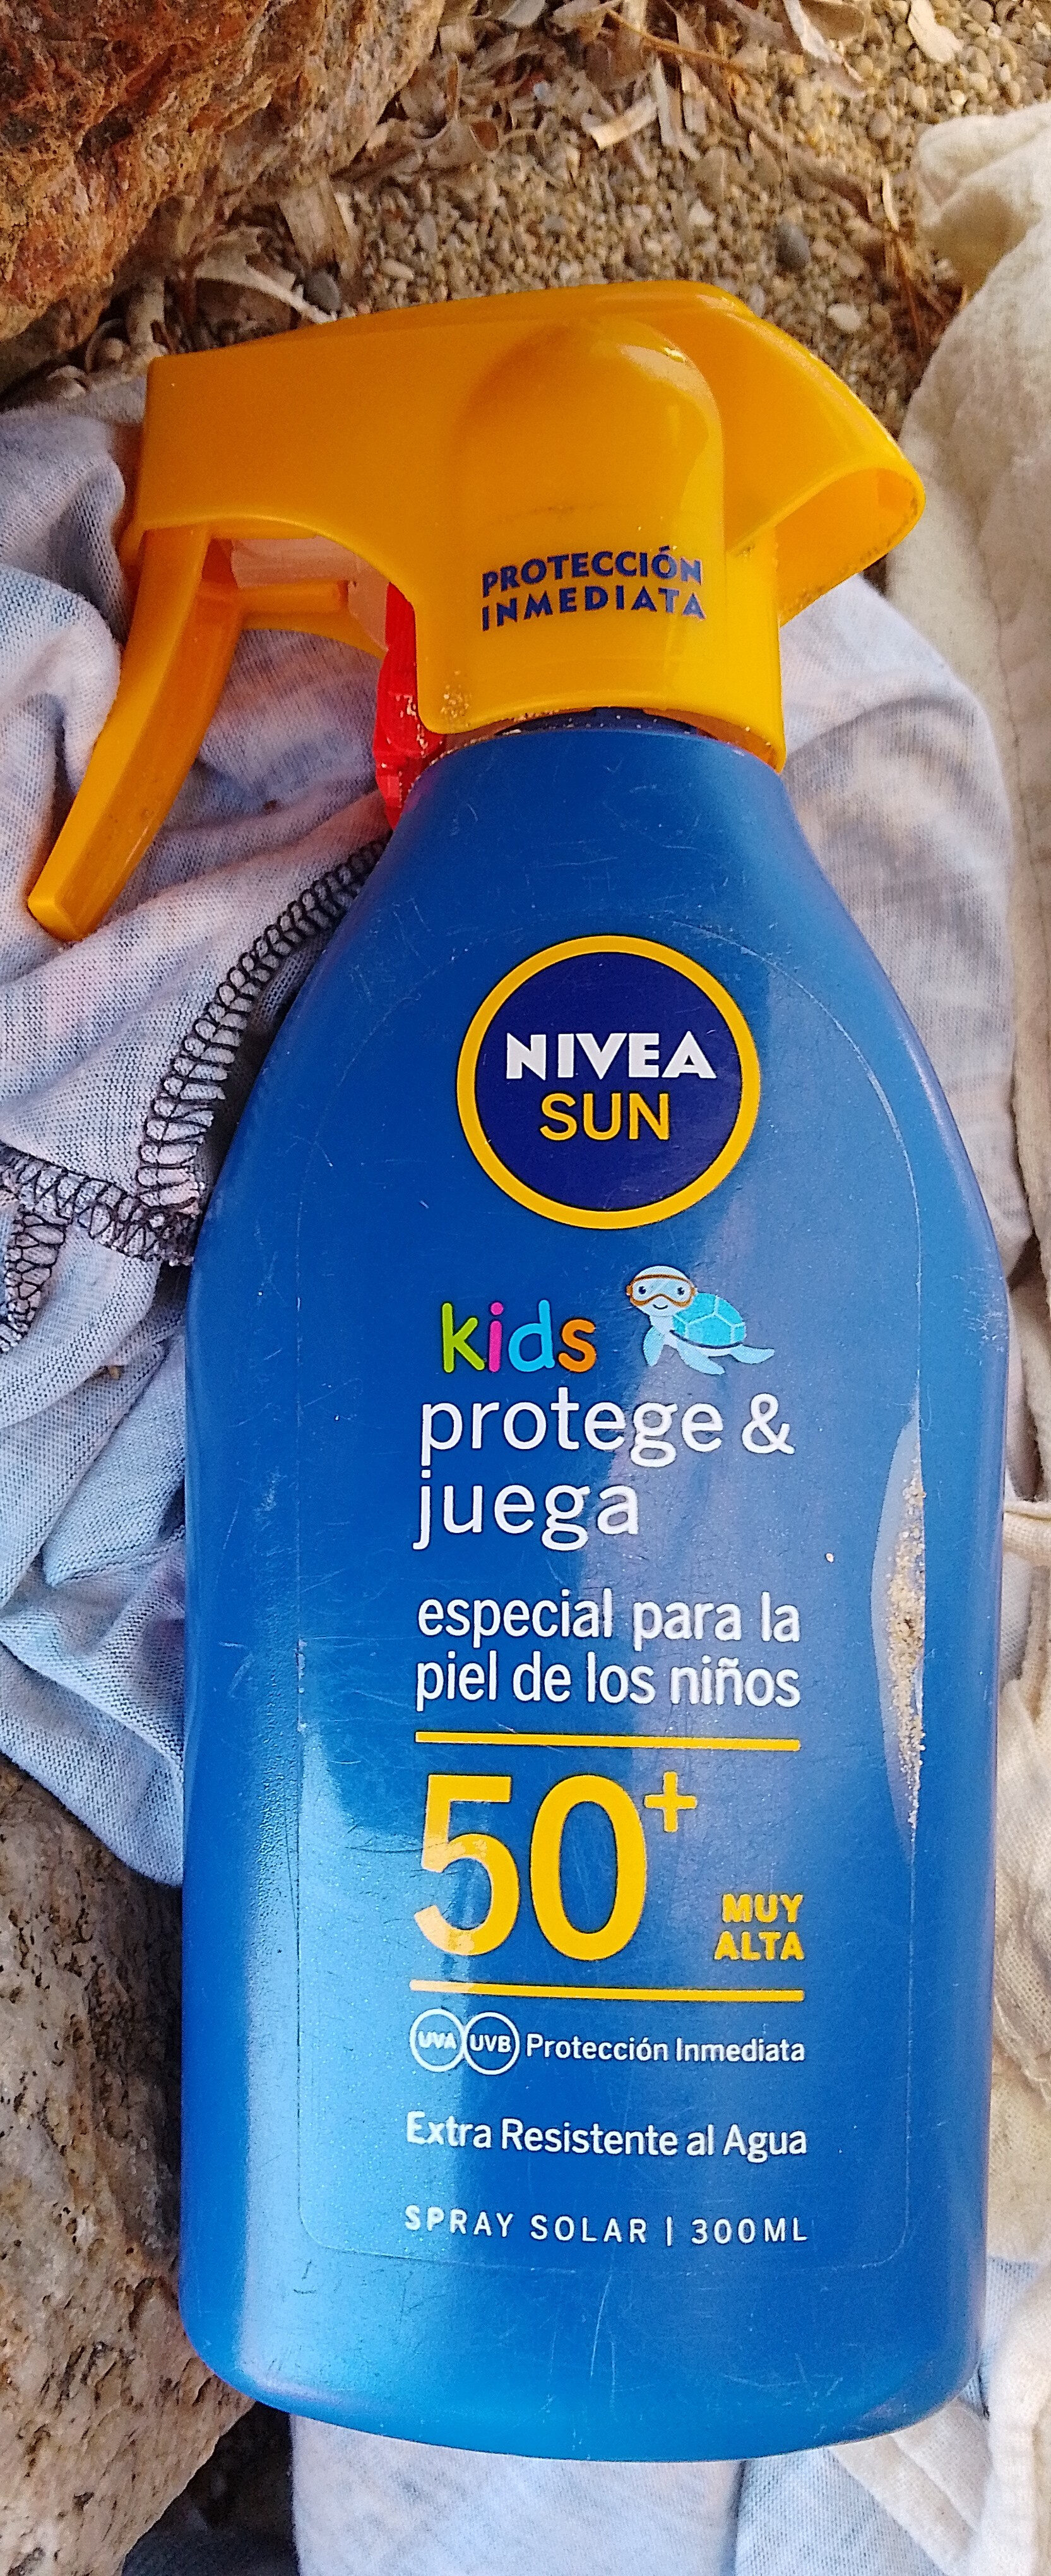 Nivea Sun kids 50+ - Produkt - es